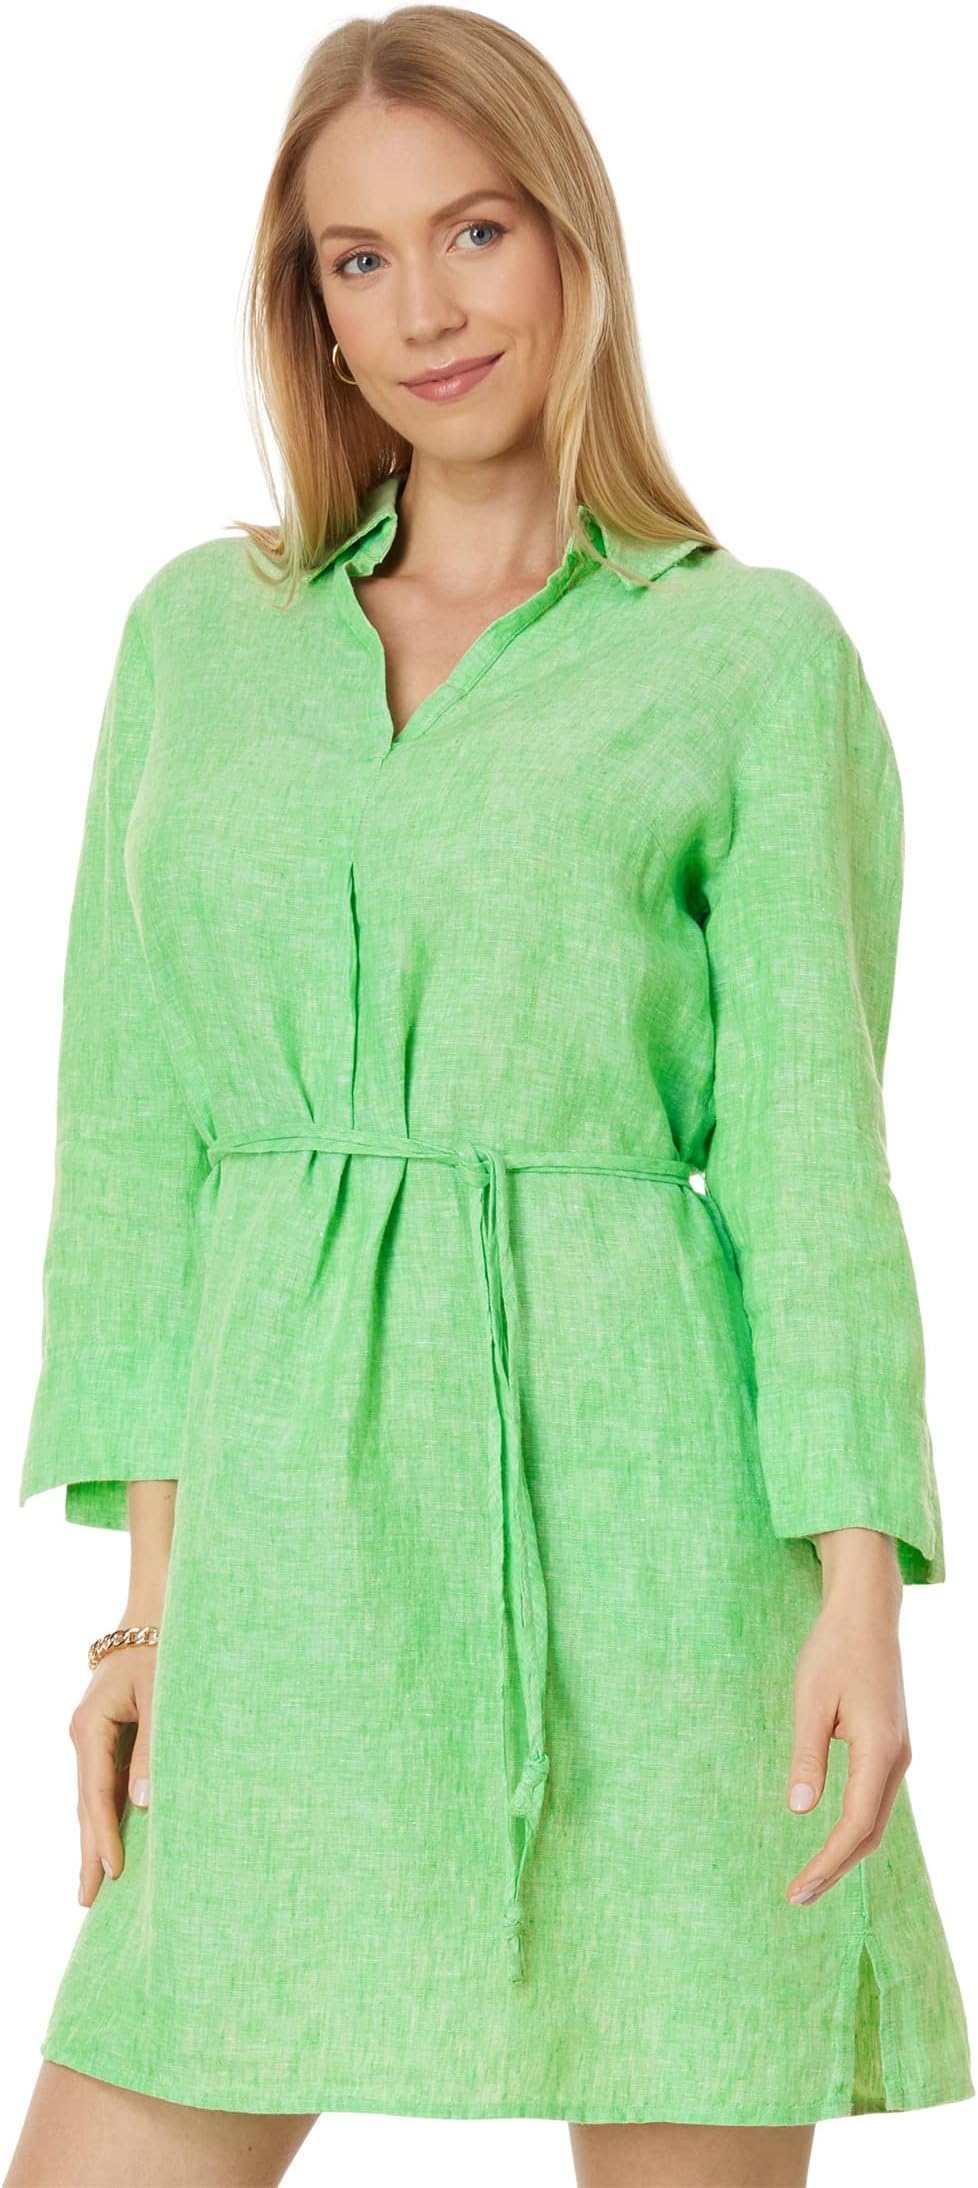 crystal green bay resort Льняное платье-туника Pilar Lilly Pulitzer, цвет Gecko Green/Resort White